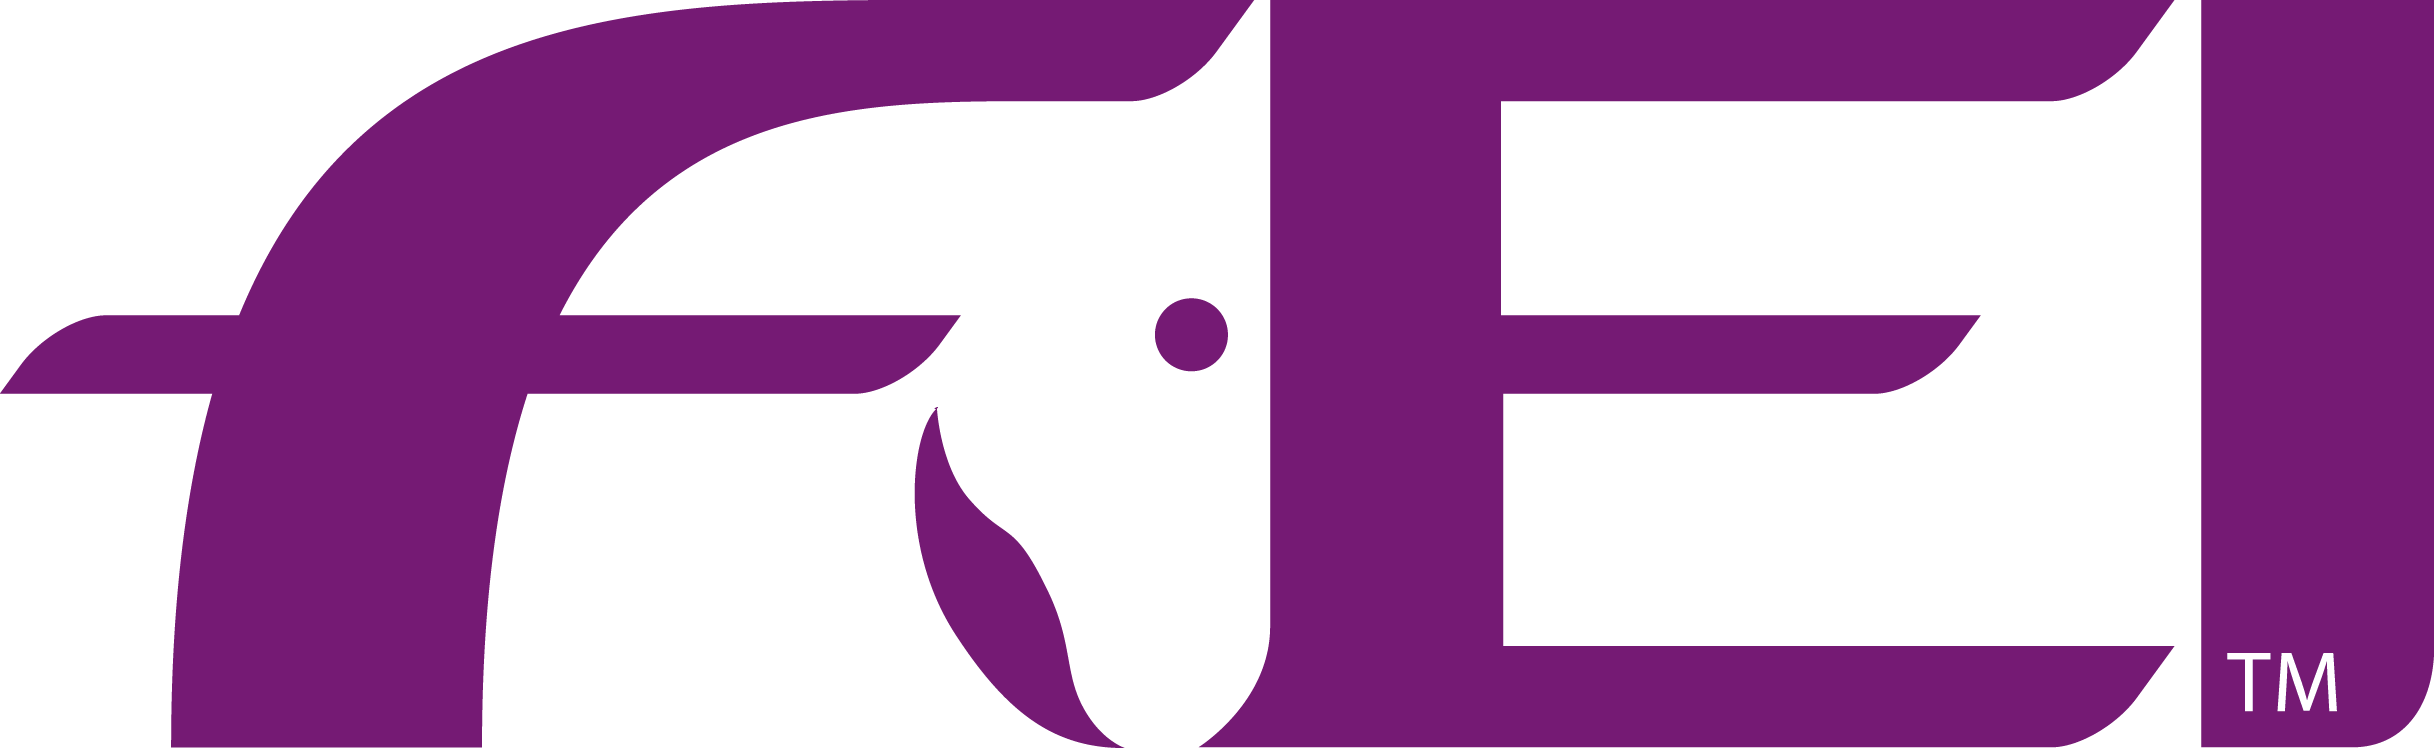 Fei Logo - Fédération Équestre Internationale (FEI) Logo [fei.org] | Free ...